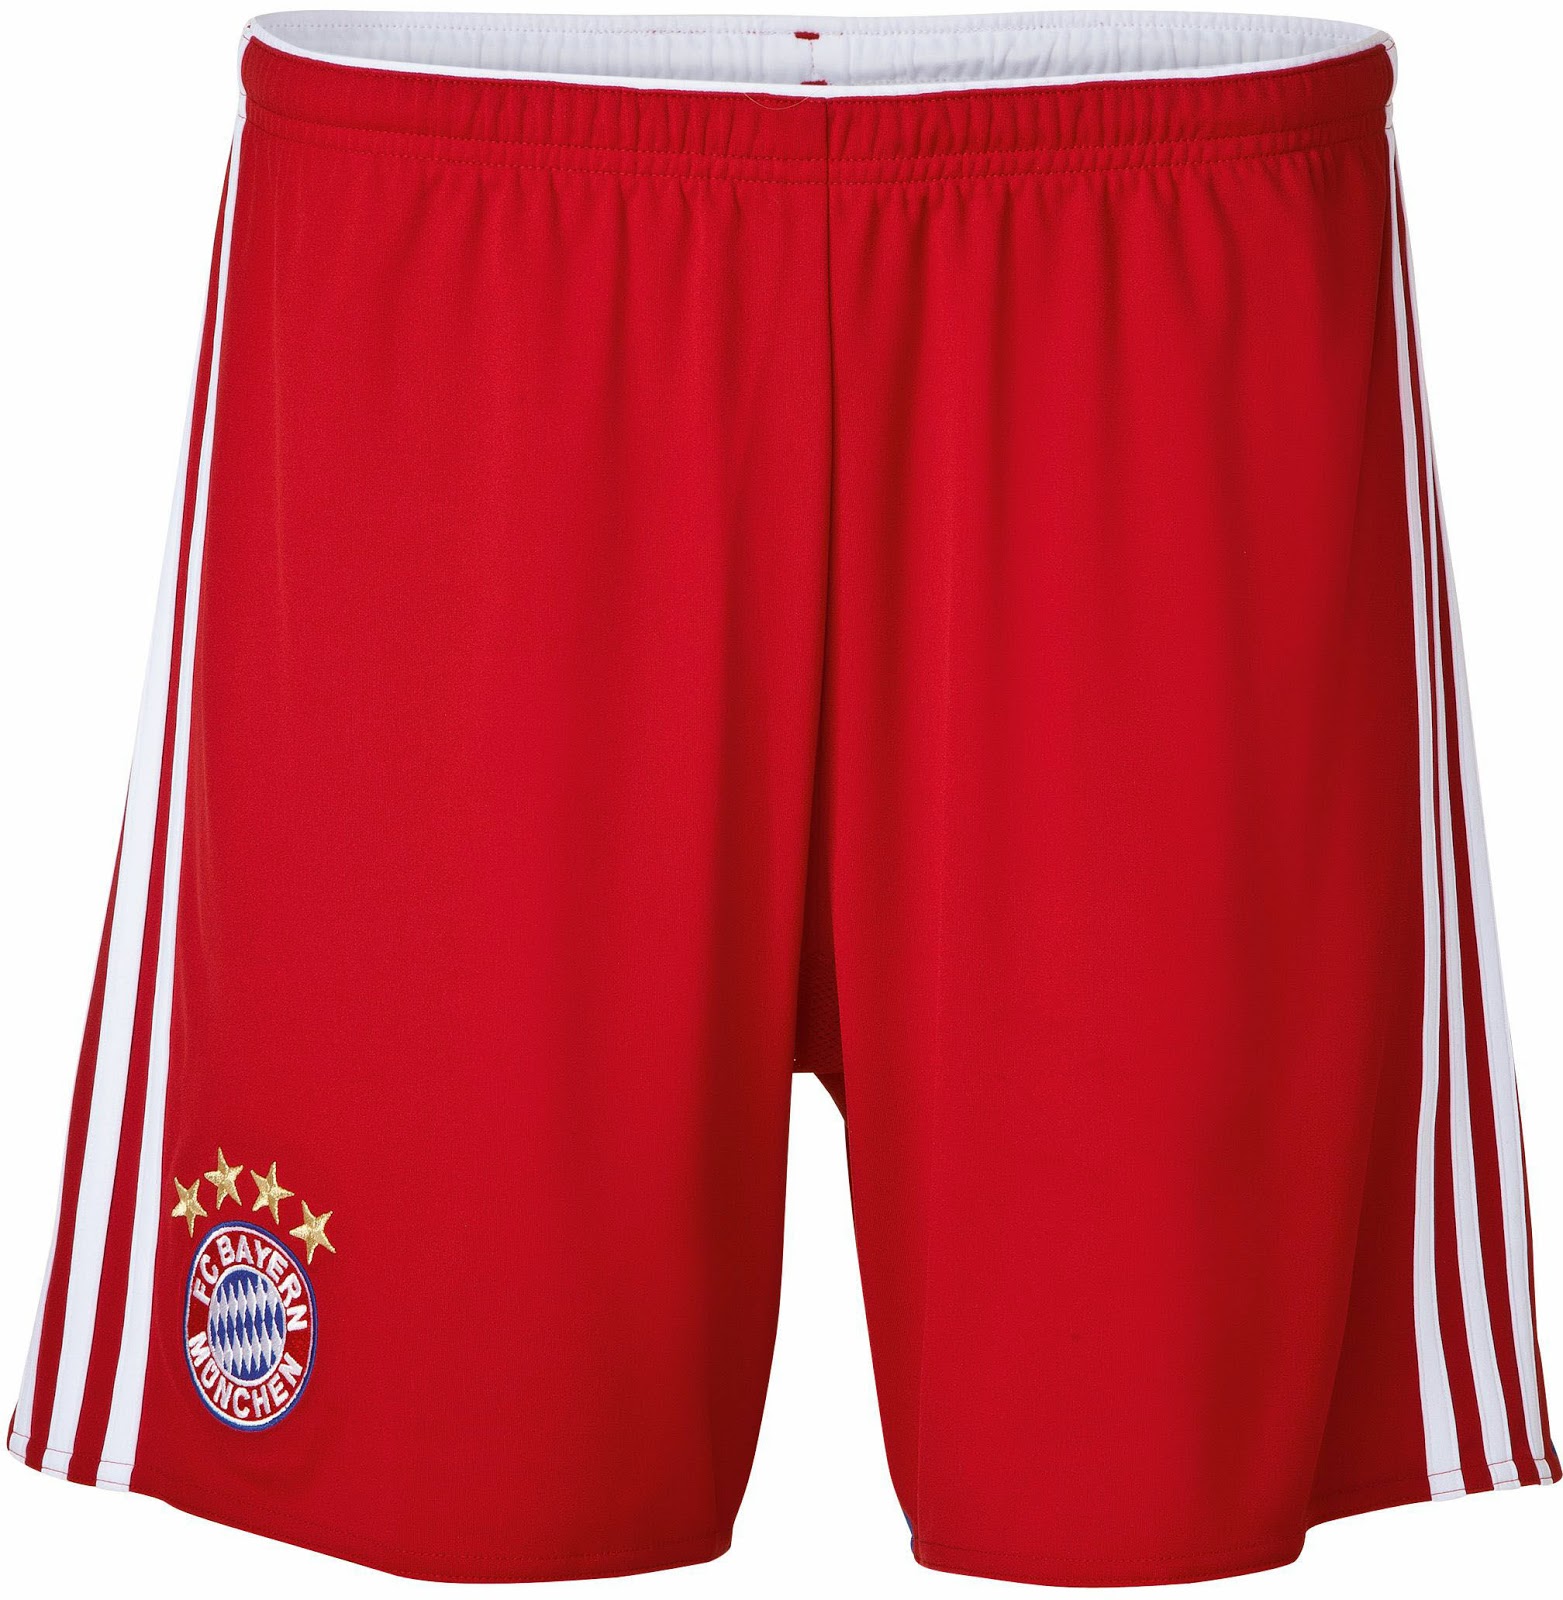 Goal Zone: FC Bayern München unveil new kit for 2014/15 season